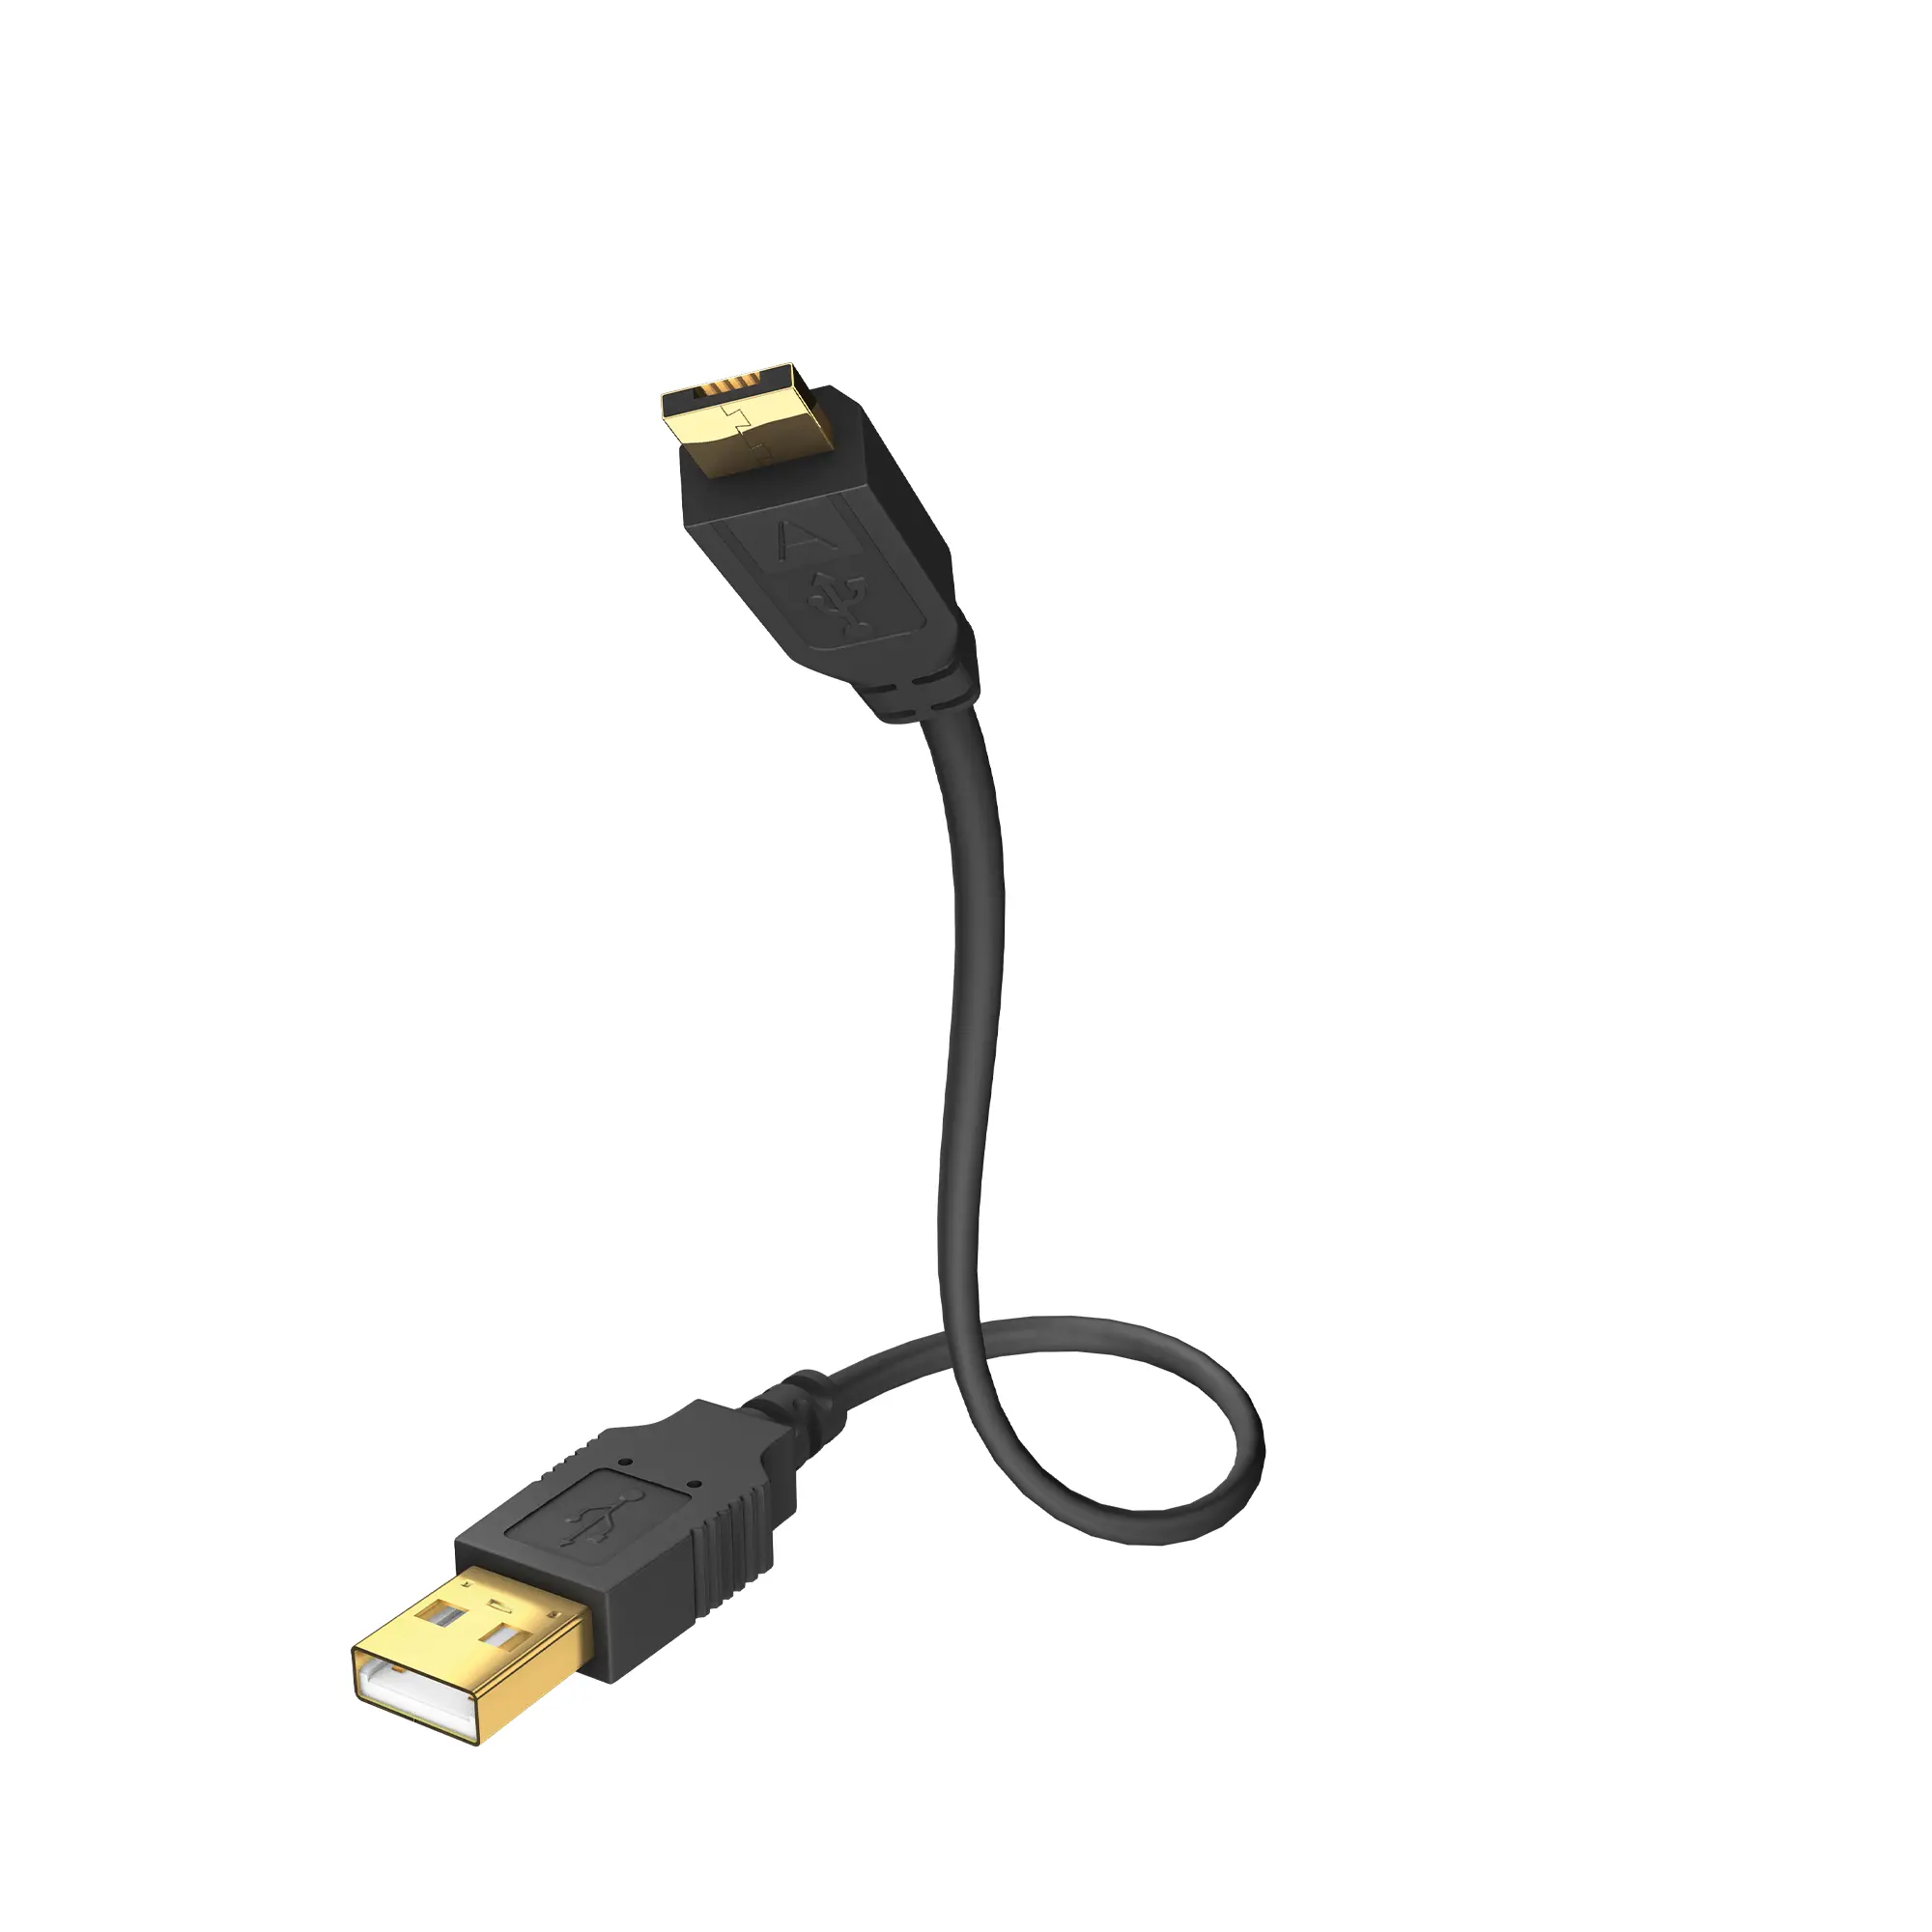 High-speed USB A < > USB Micro A